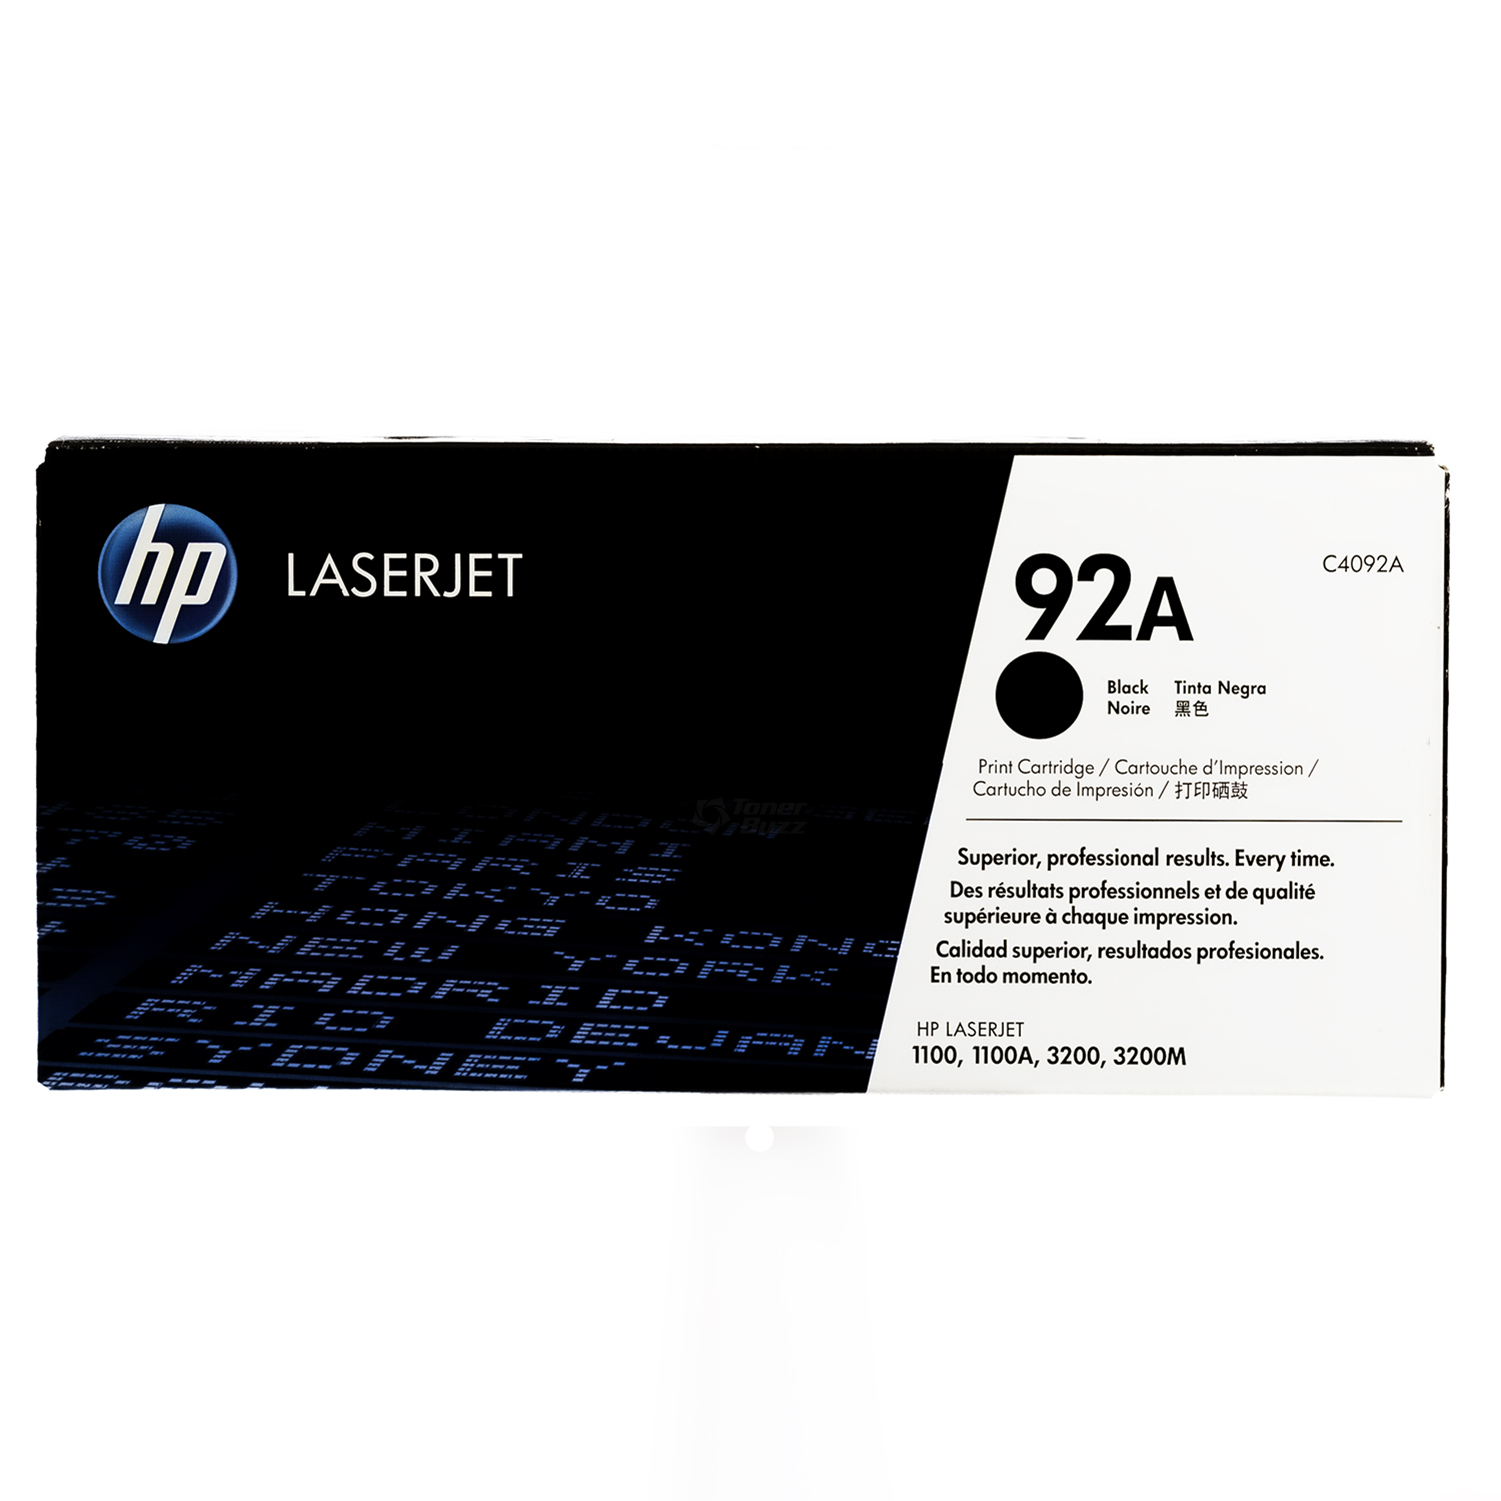 C4092A | HP 92A | Original HP LaserJet Toner Cartridge - Black